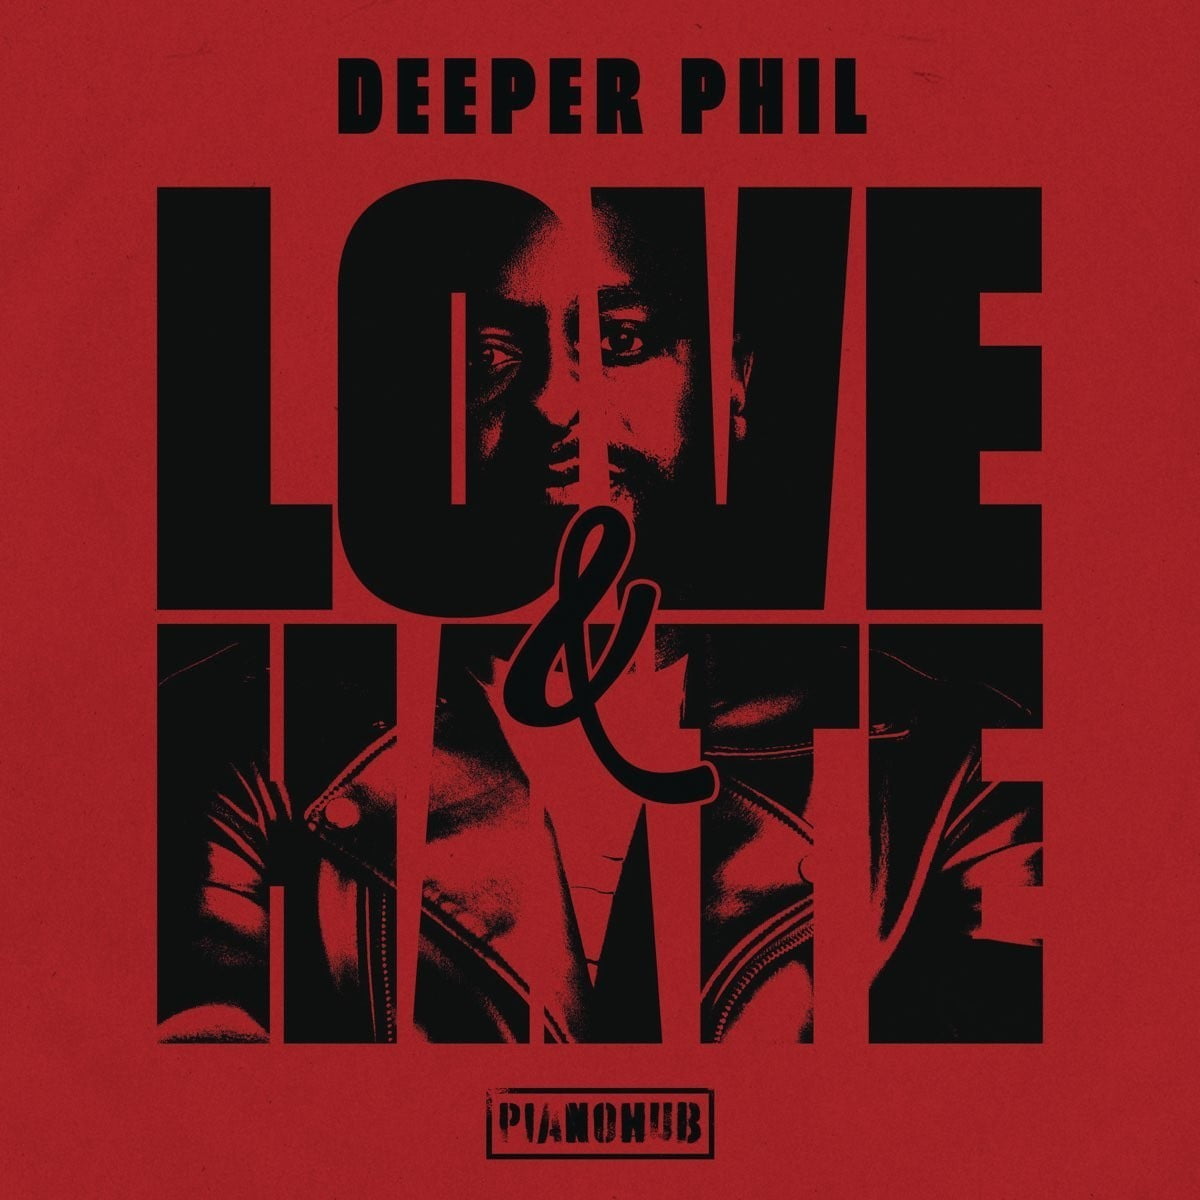 Deeper Phil – Black Label 7 ft. Bongza & Shino Kikai mp3 download free lyrics